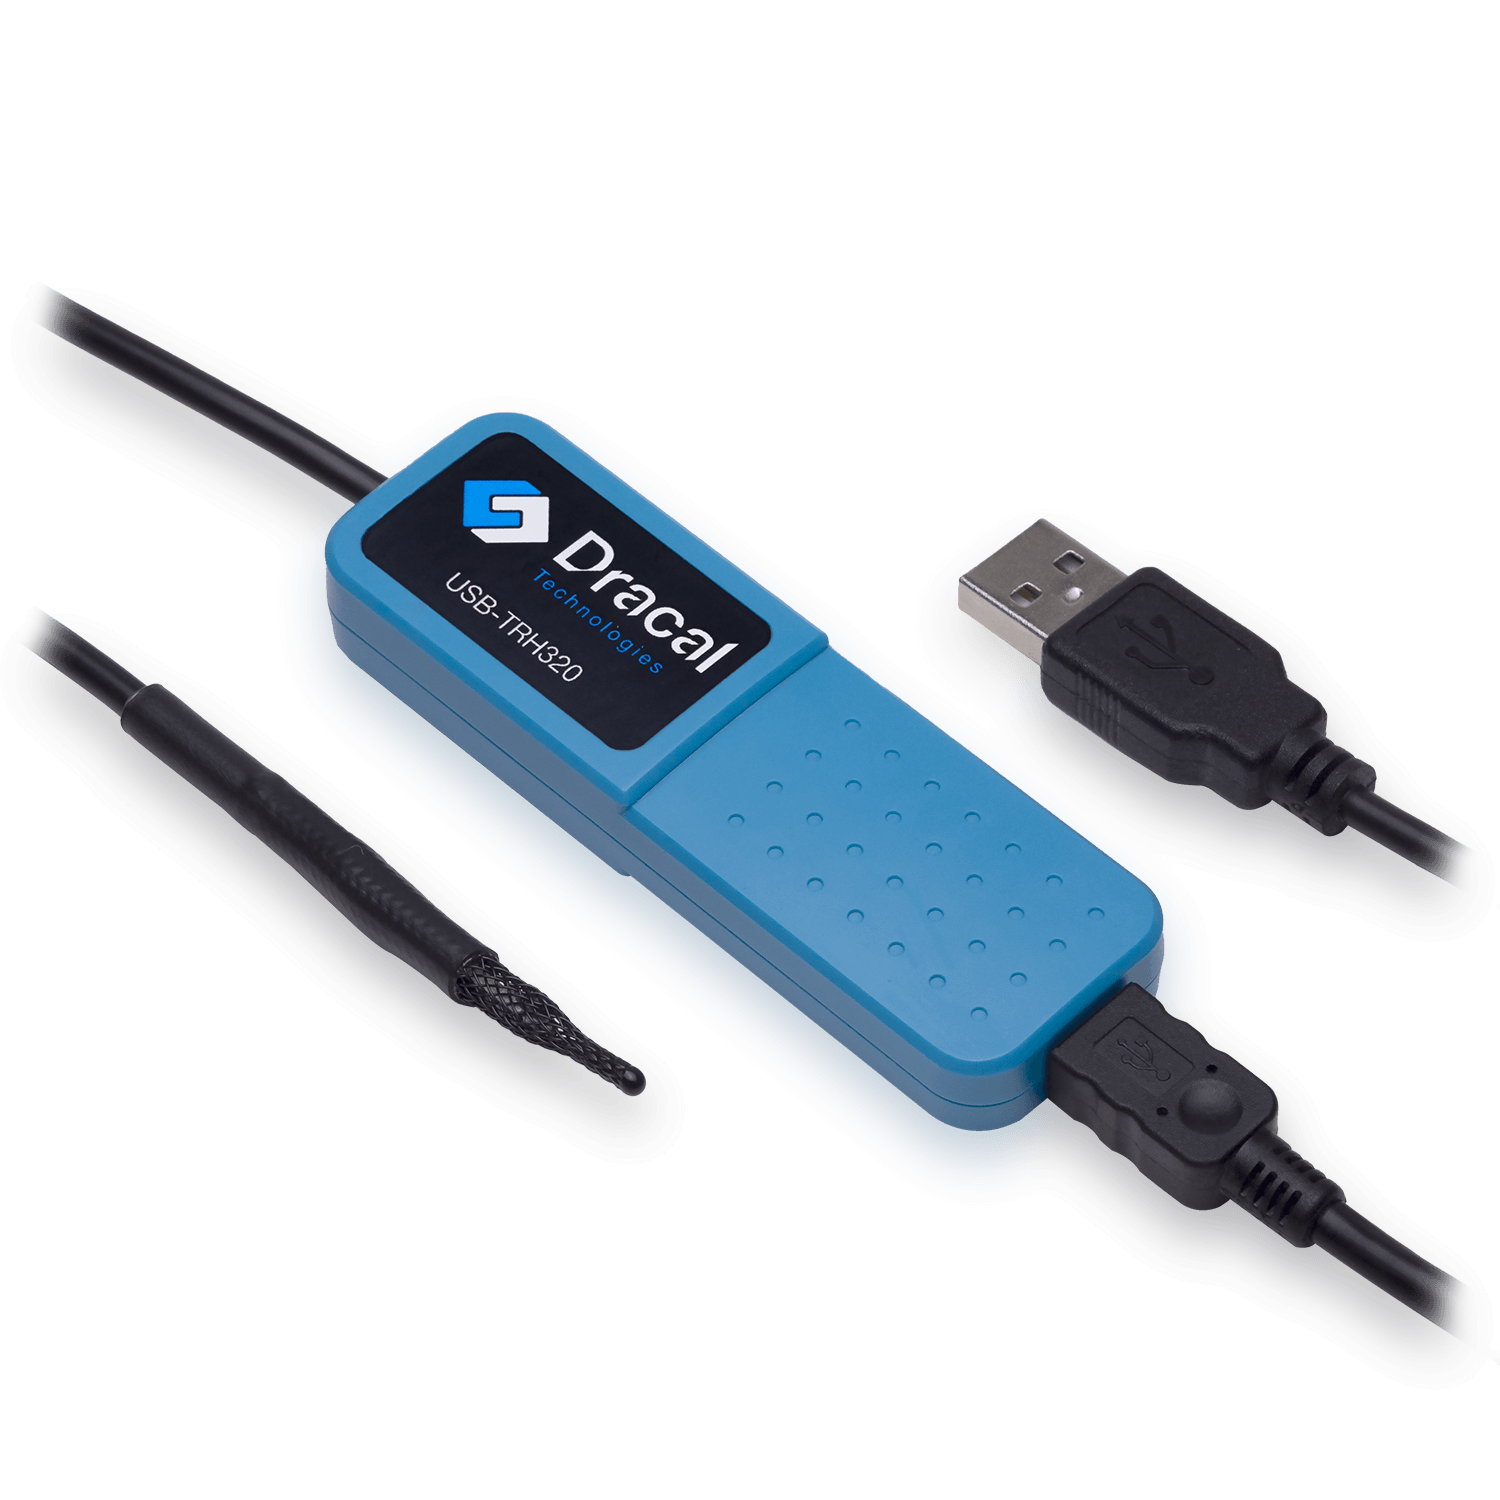 TRH320: USB temperature and relative humidity measuring instrument.